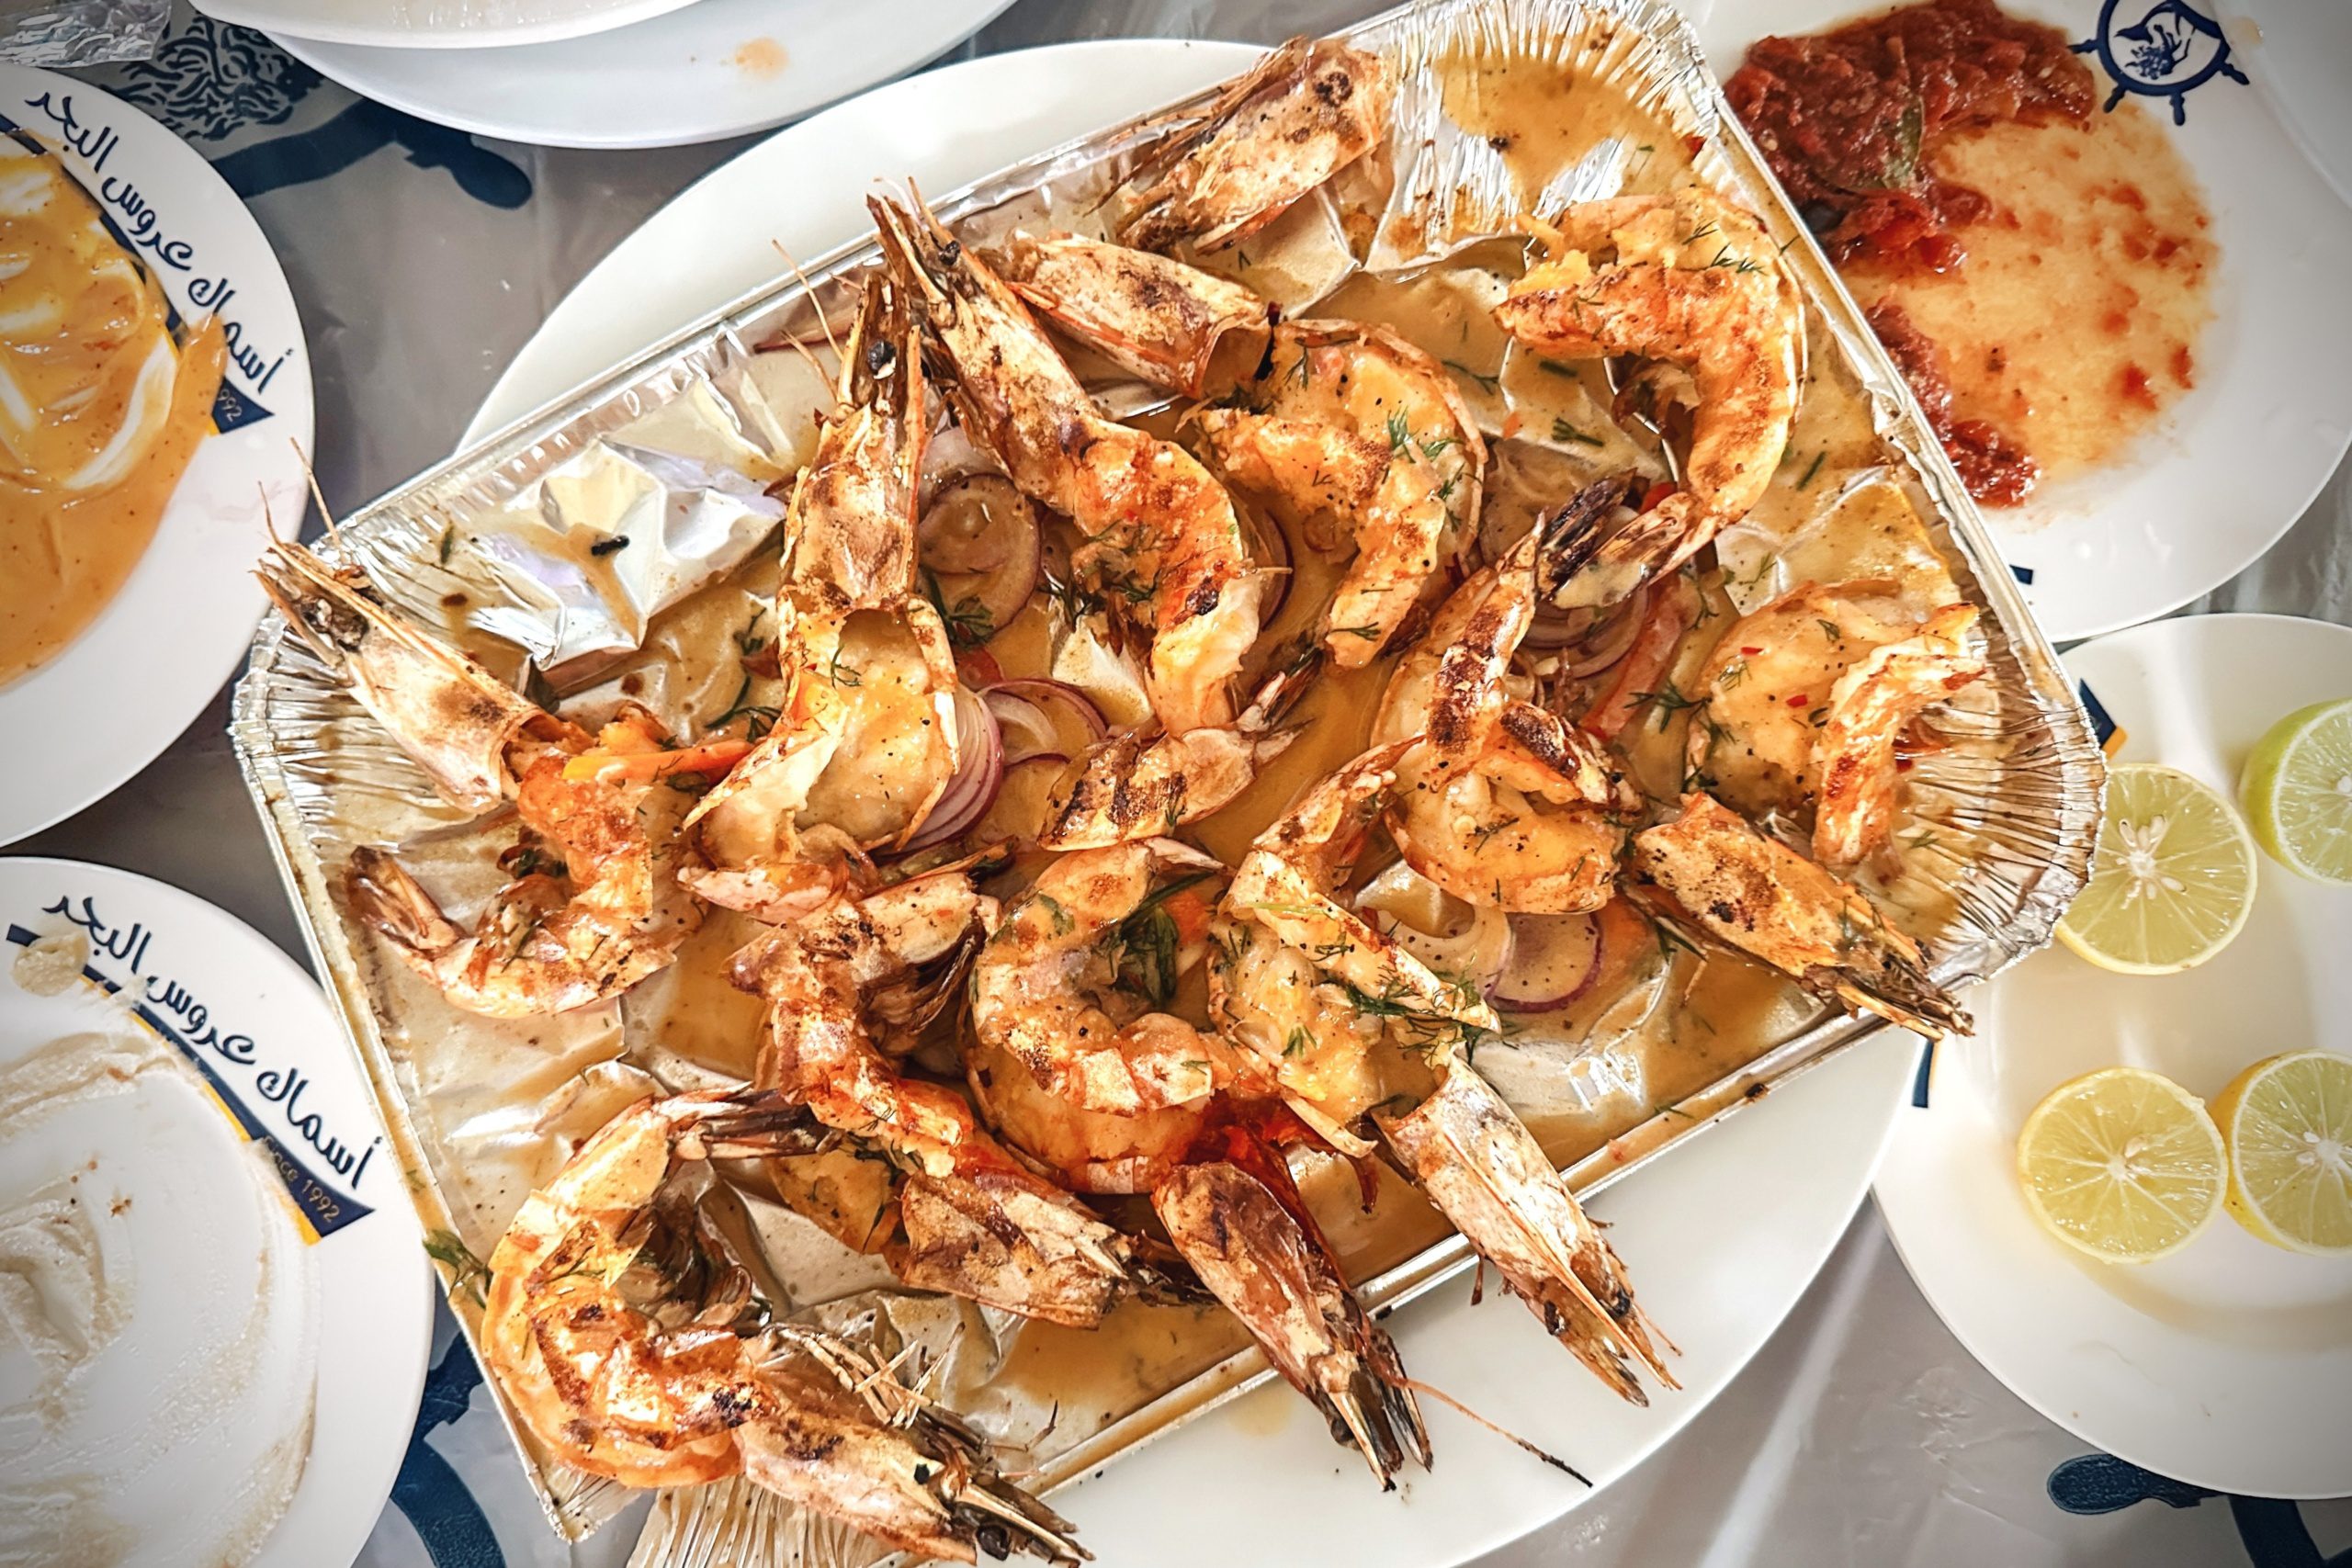 seafood alexandria egypt, egyptian food, shrimp